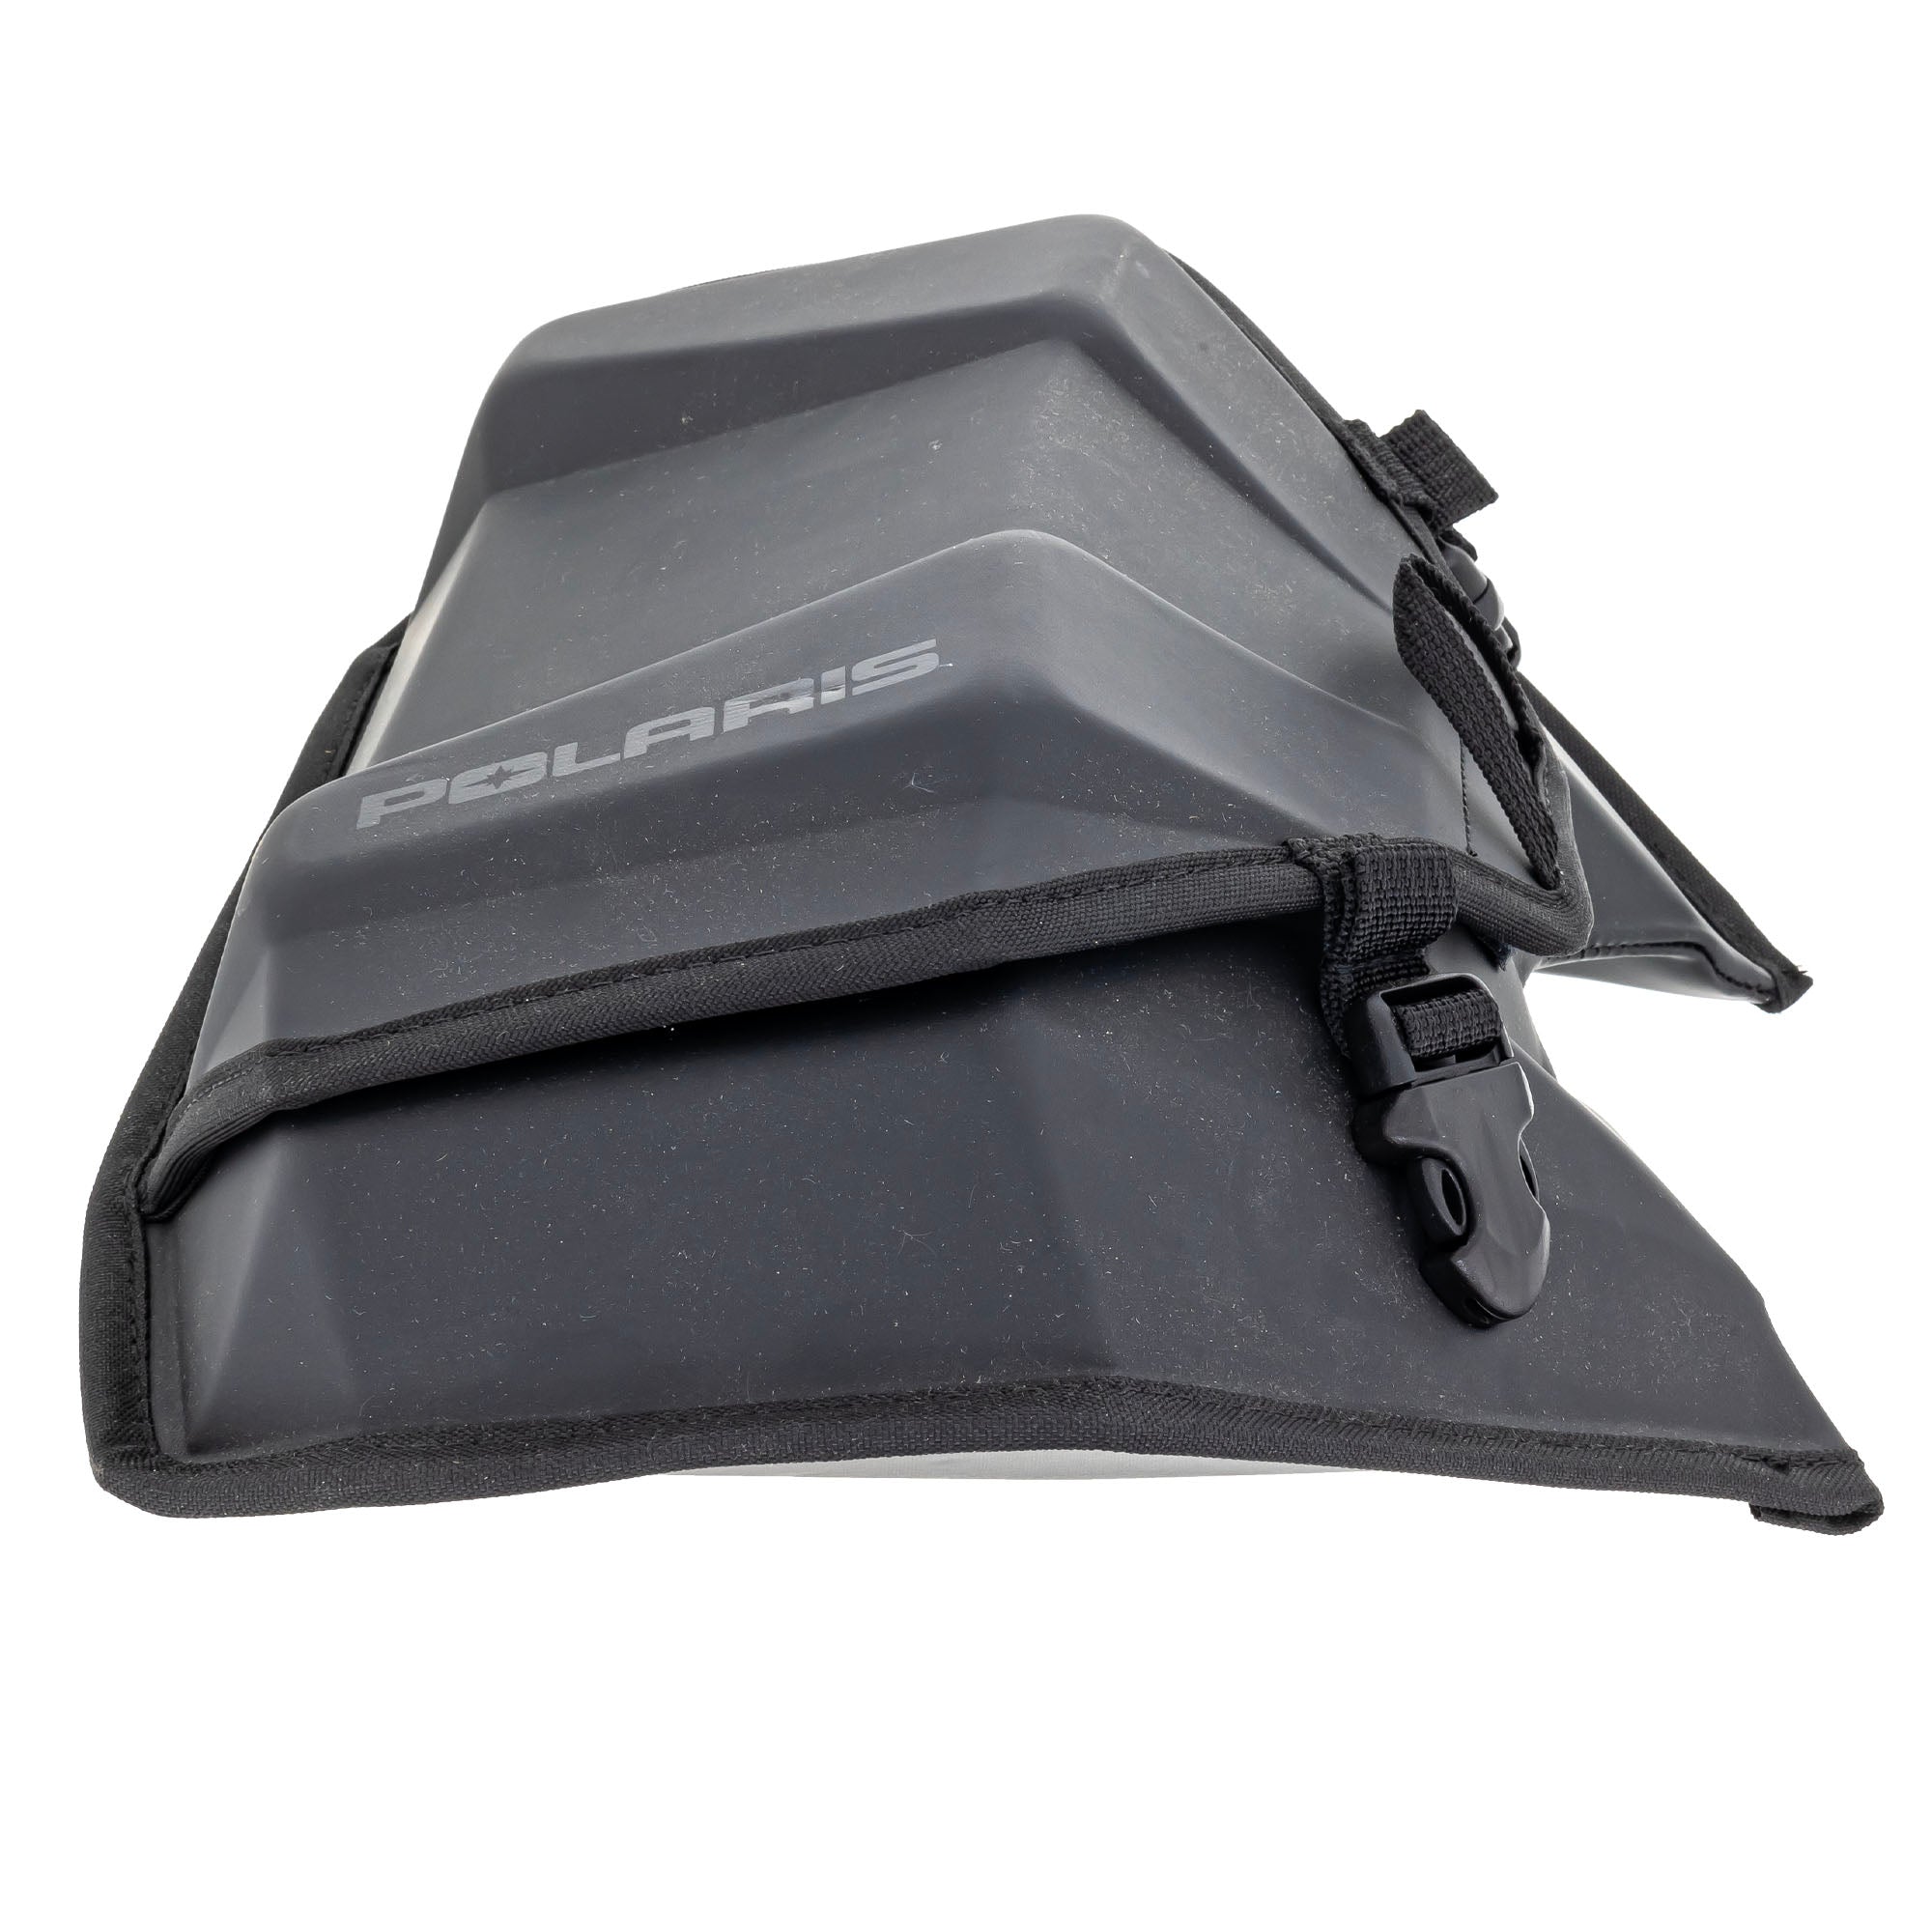 Polaris 2880375 Black Pro-Fit Mountain Dash Bag Pro-RMK Assault SKS 600 800 850 OEM